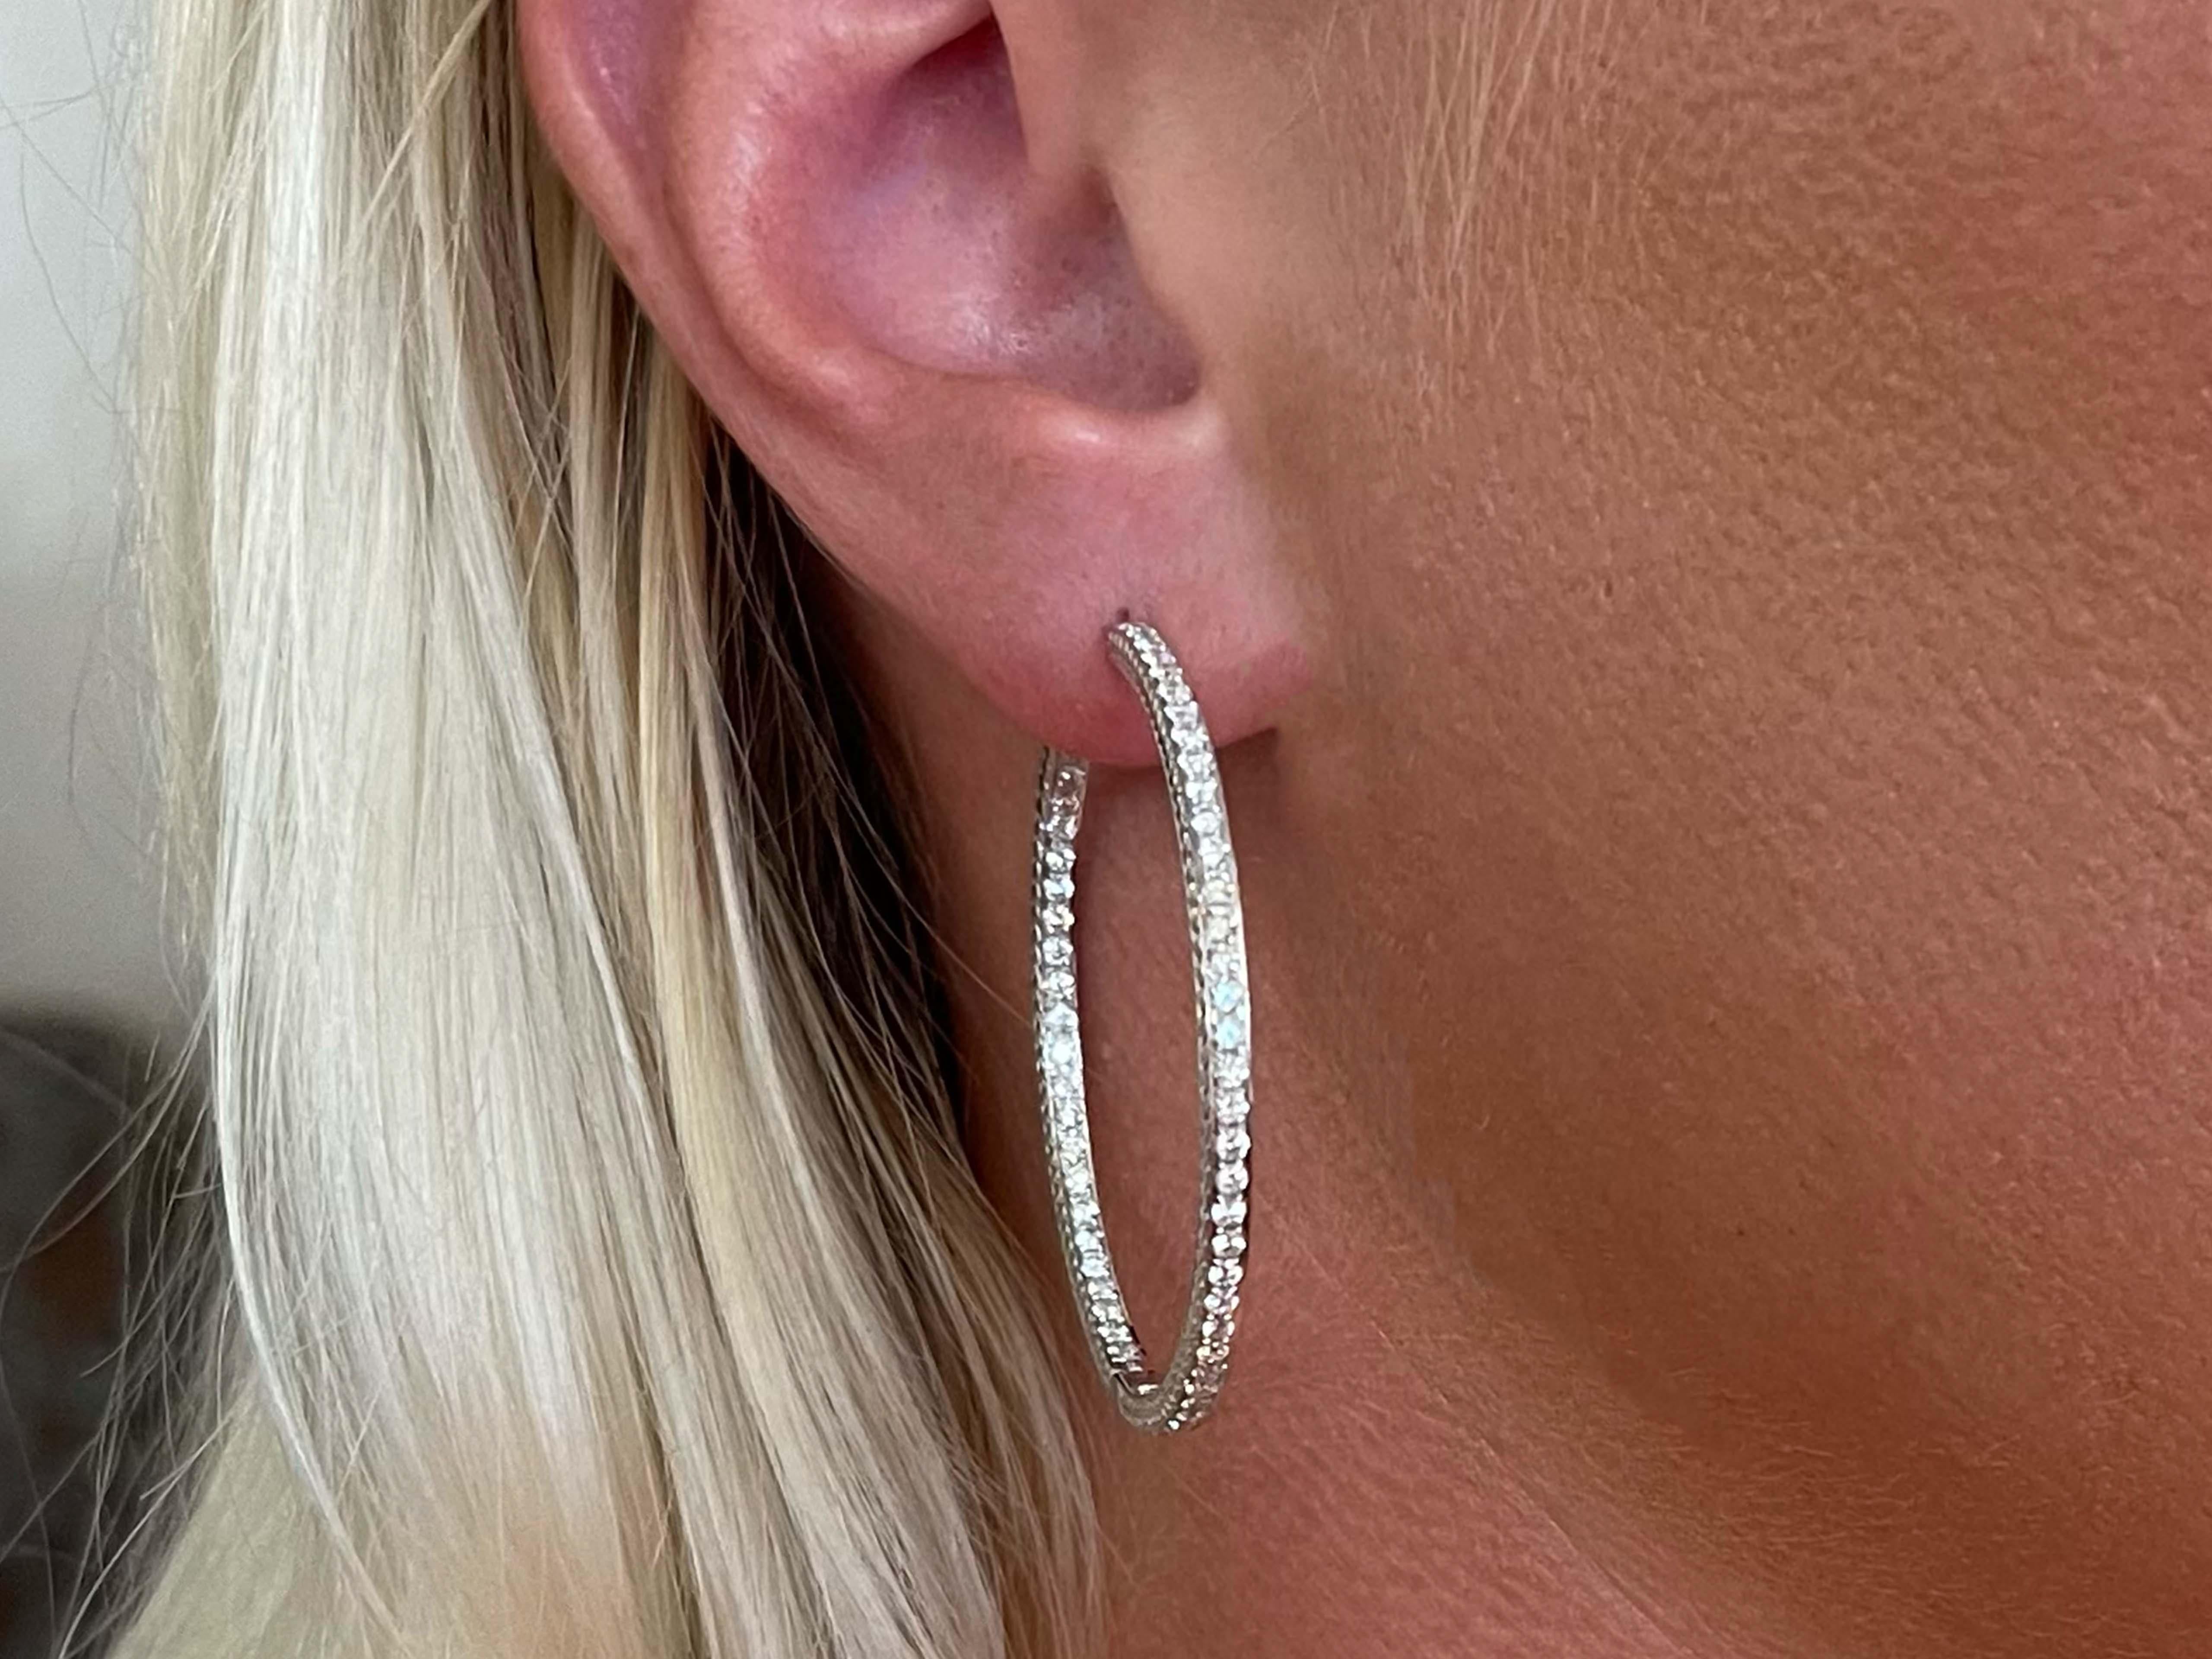 Earrings Specifications:

Style: Inside Out Diamond Hoop Earrings

Metal: 18k White Gold

Total Weight: 12.3 Grams

Measurements: 1.75